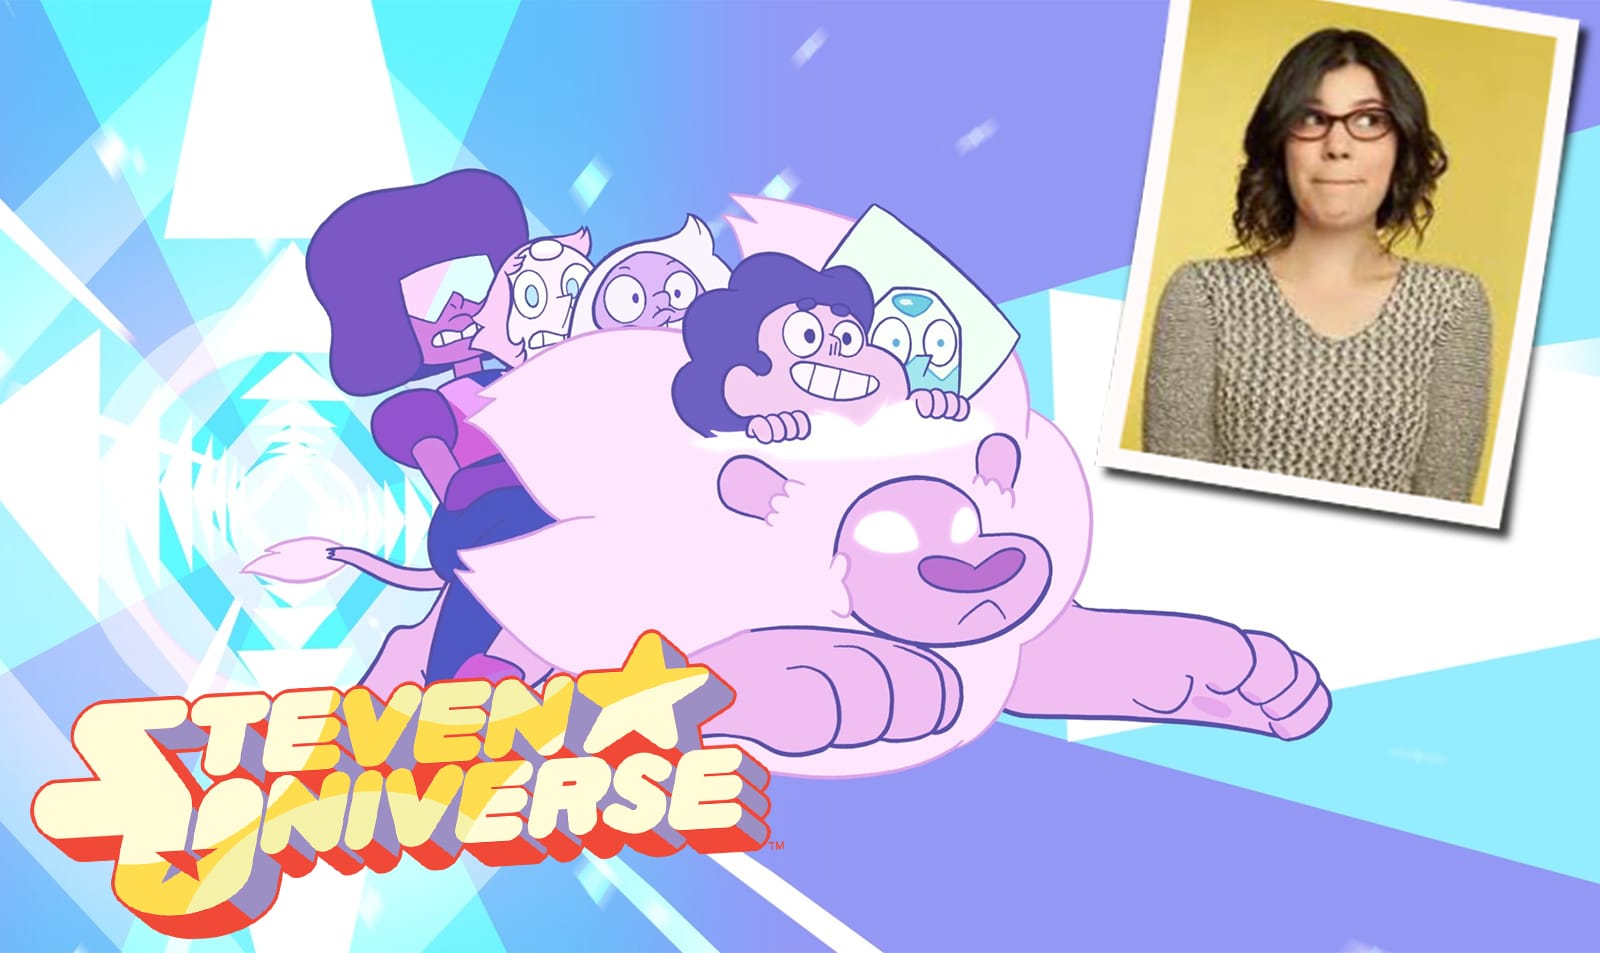 Image of steven universe cartoon with animator Rebecca Sugar portrait to the right